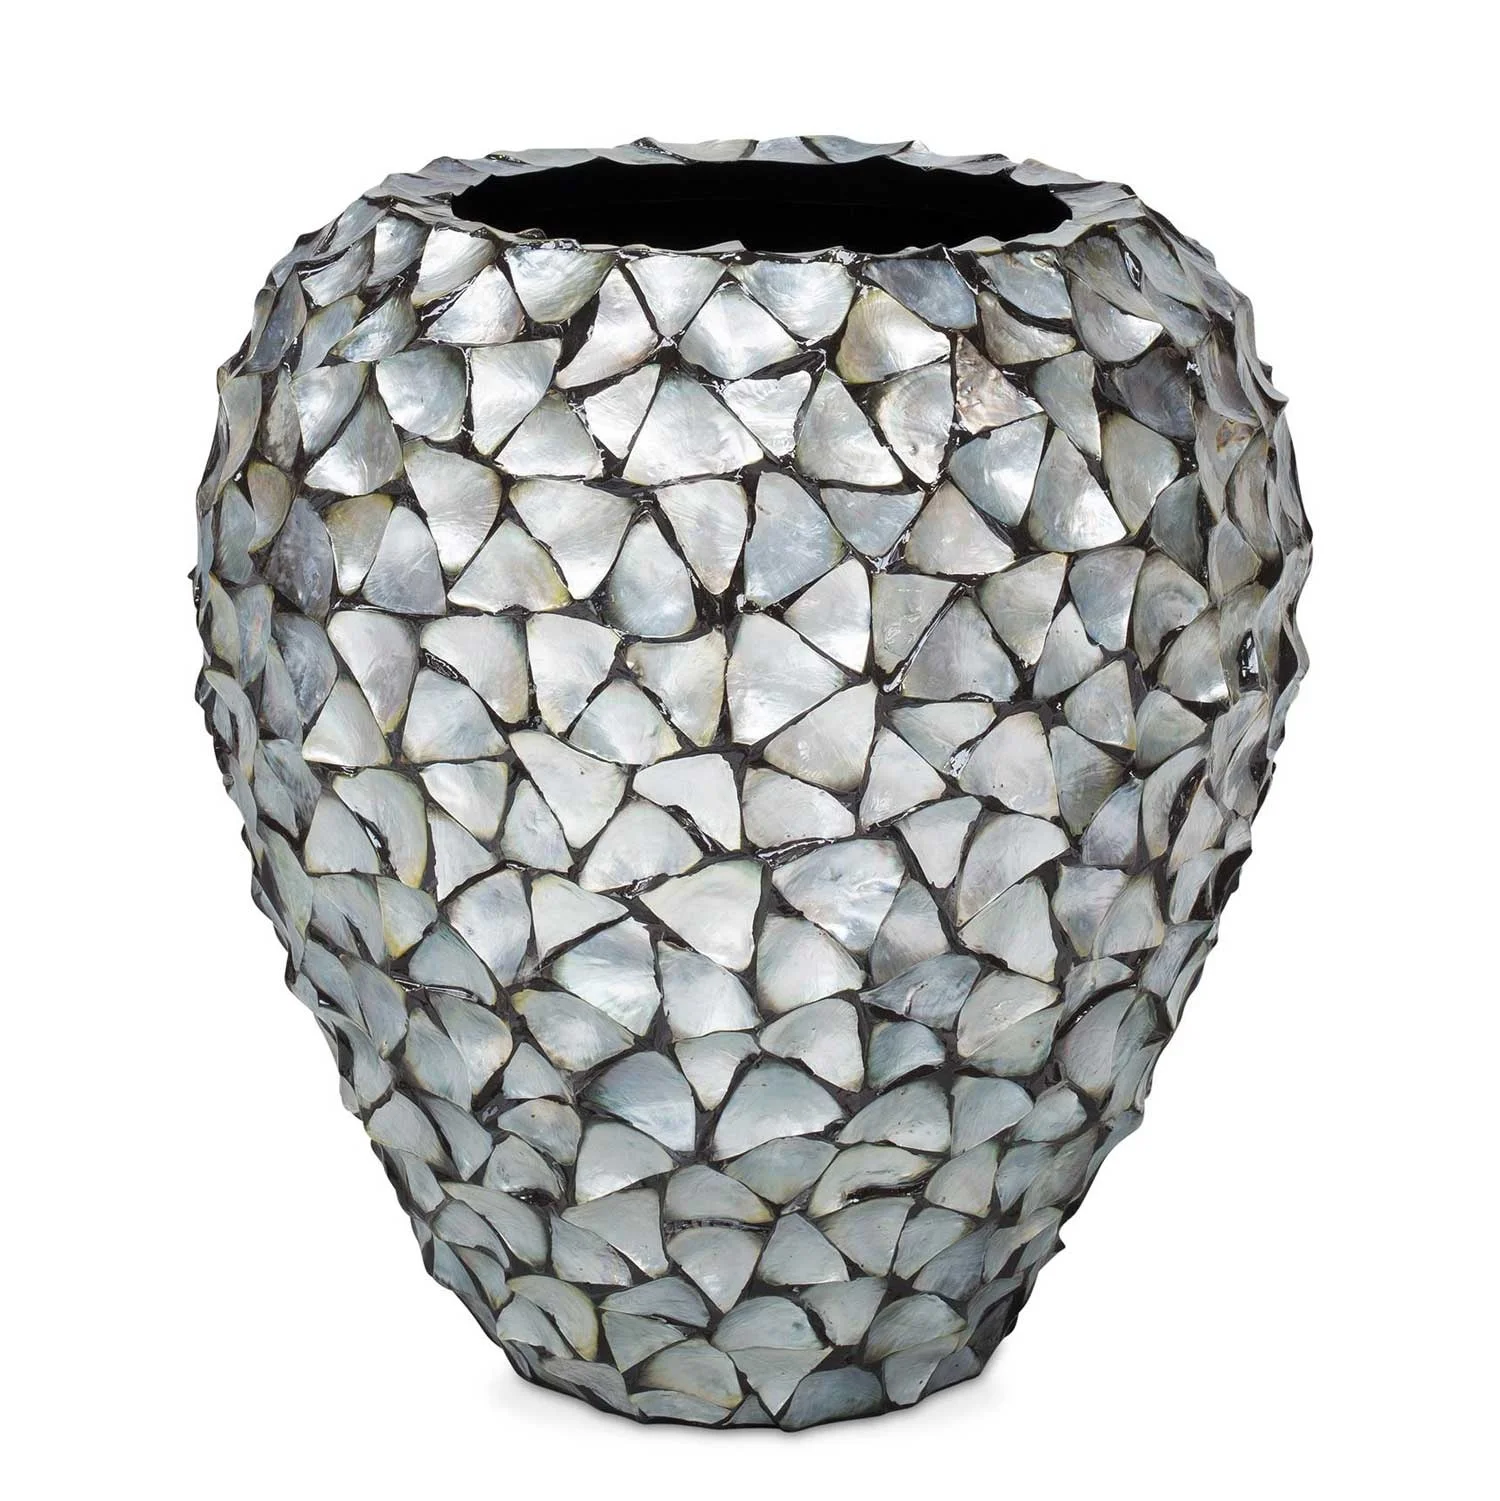 Handicraft Hot selling Mother of pearl Decorative Vase Handmade Mother of pearl Shell Vase White Seashell Vase Netherlands (10000010991076)